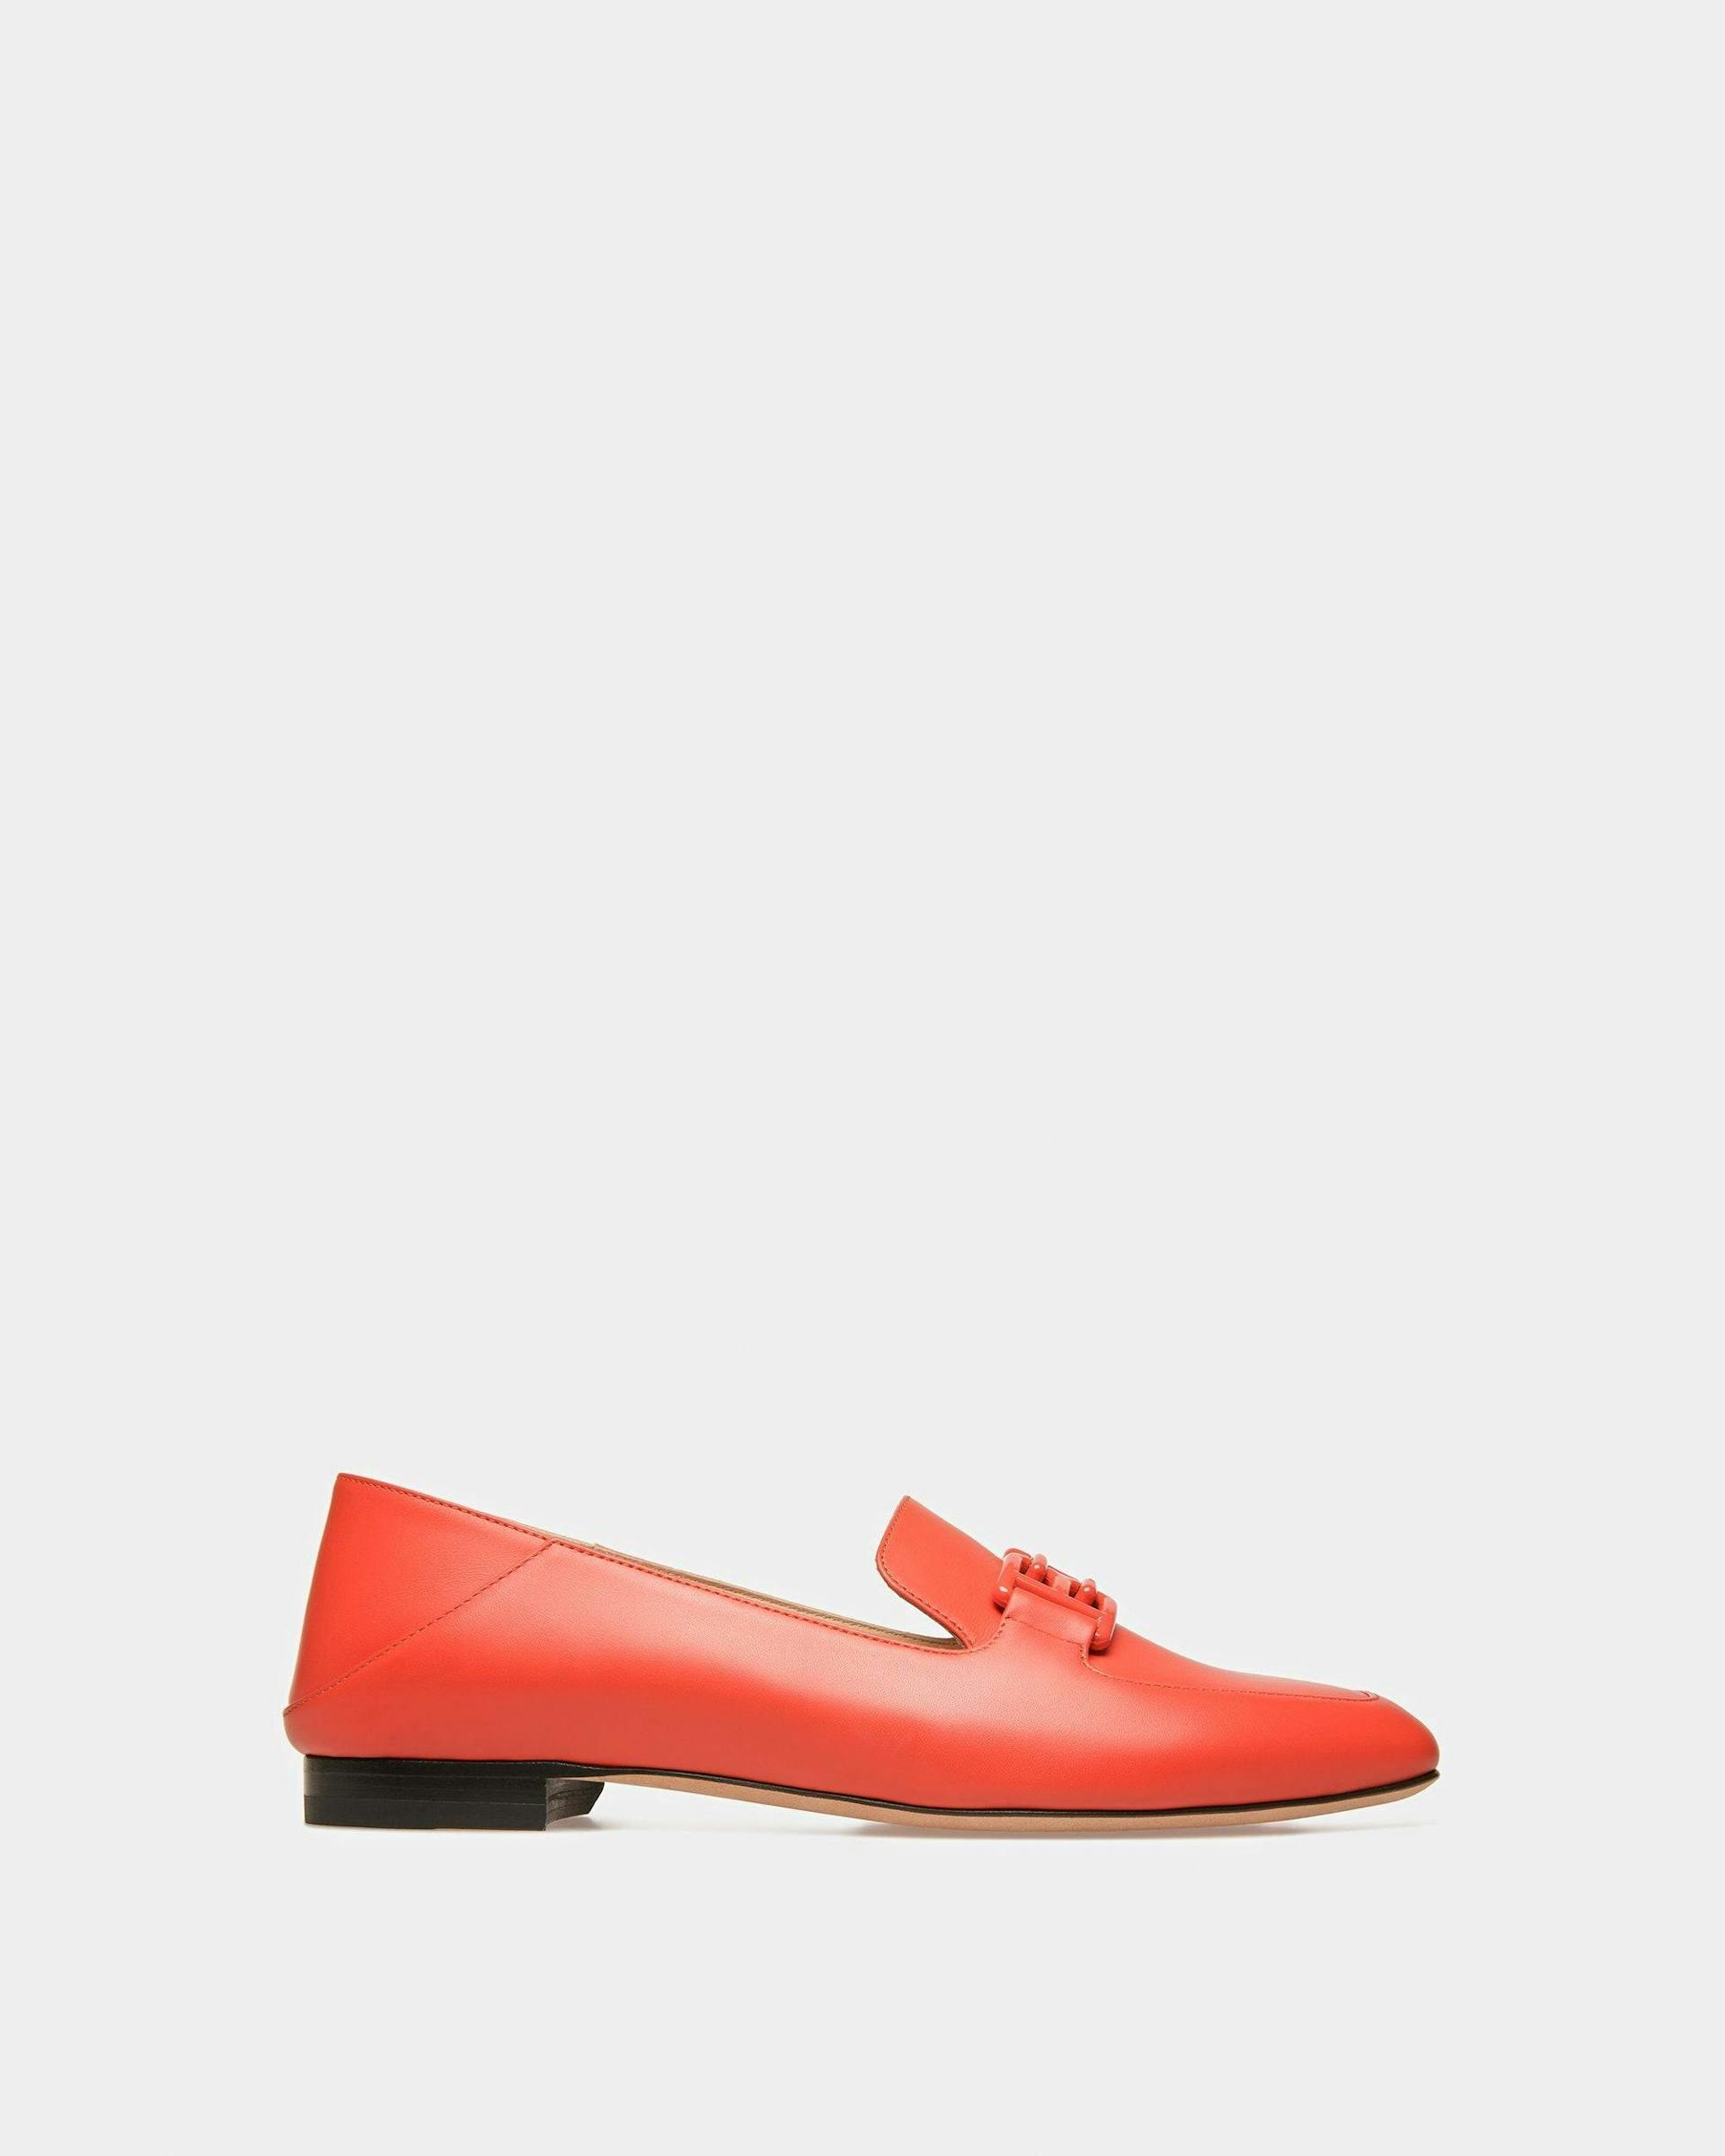 Ellah Leather Slippers In Orange - Women's - Bally - 01